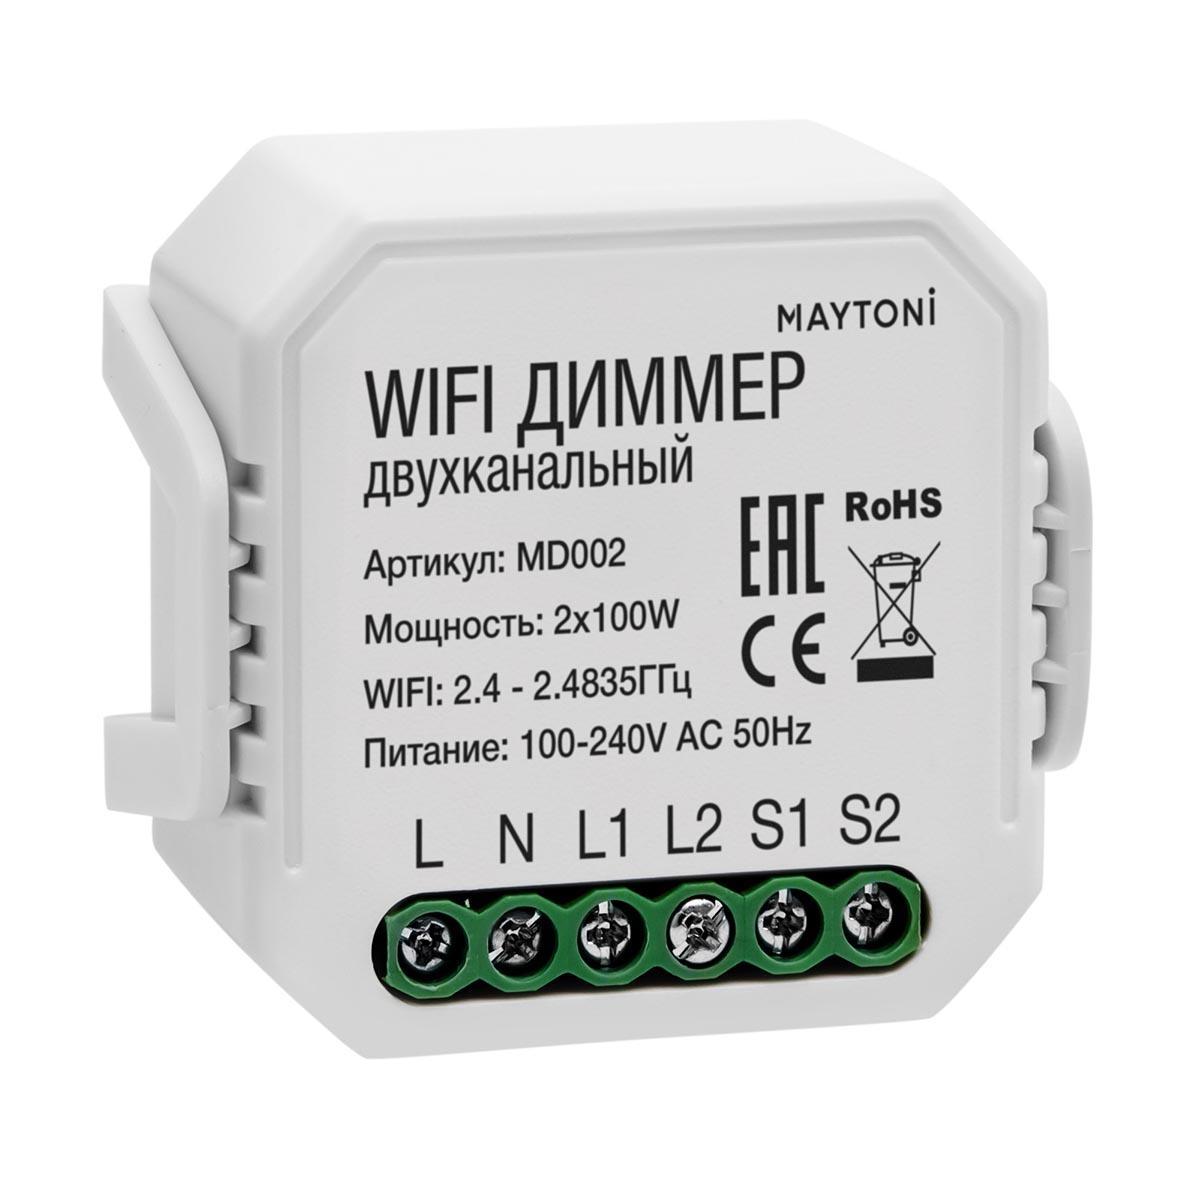 Wi-Fi диммер двухканальный Maytoni Technical Smart home MD002 диммер smart d3 dim 12 24v 8a 2 4g